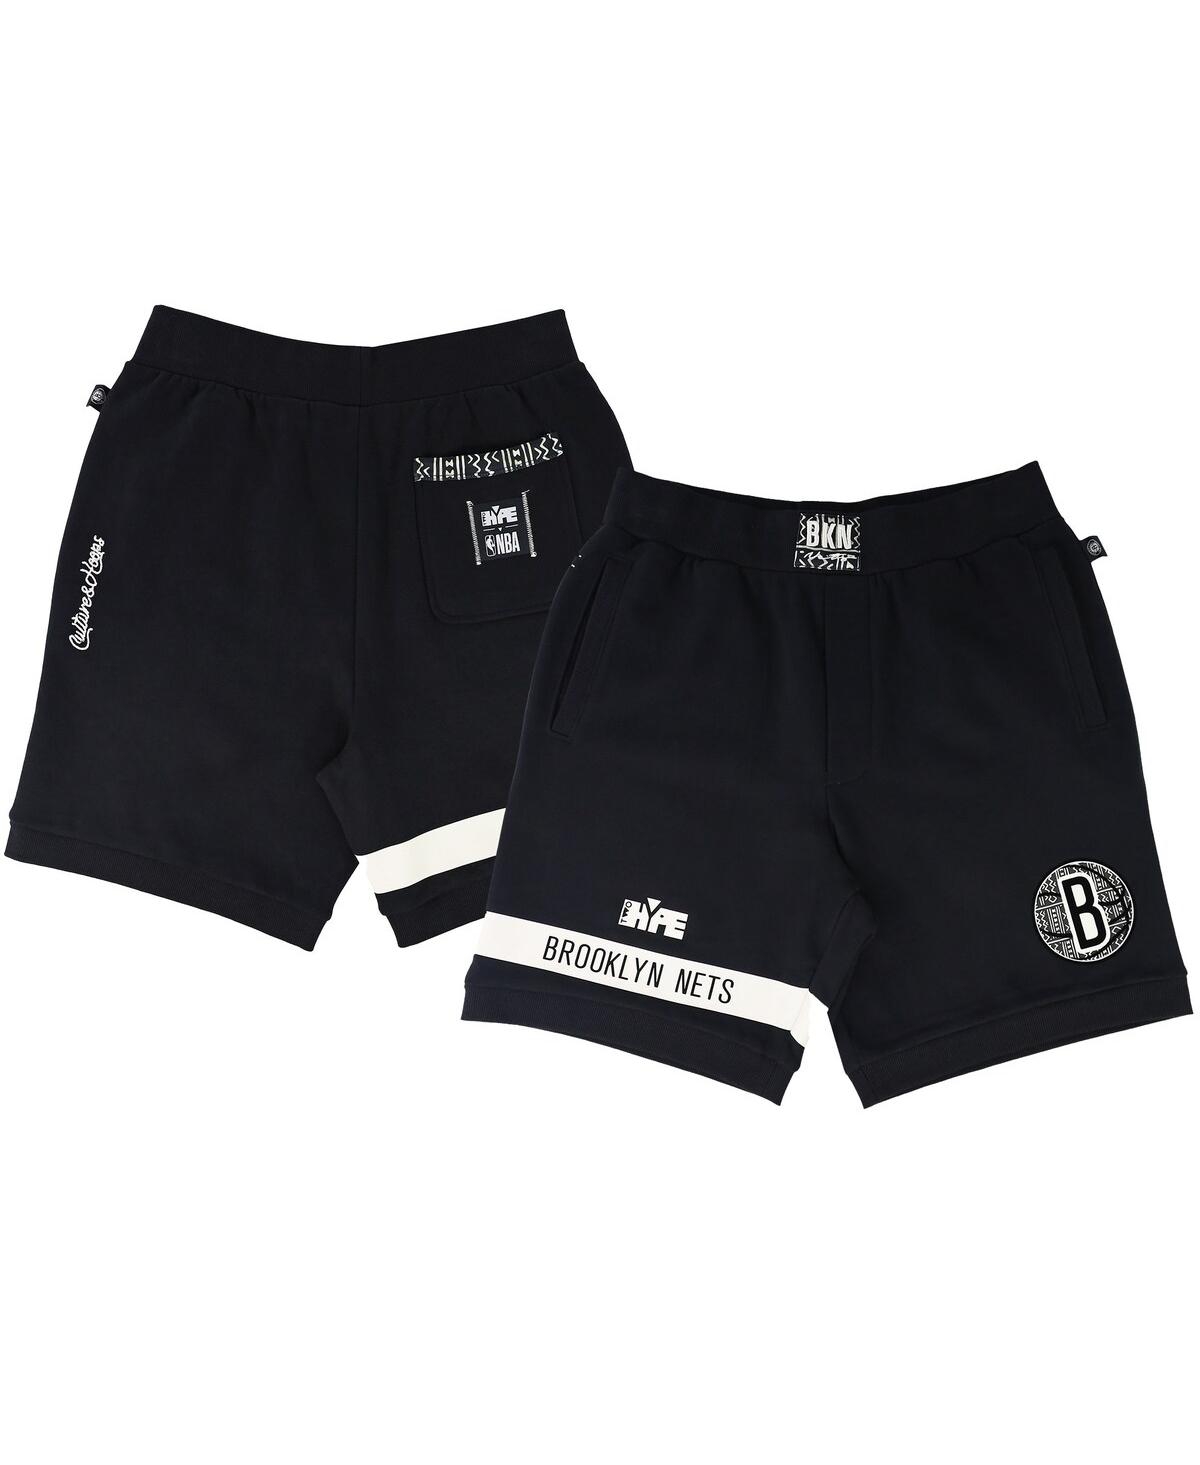 Men's and Women's Nba x Two Hype Black Brooklyn Nets Culture & Hoops Premium Classic Fleece Shorts - Black